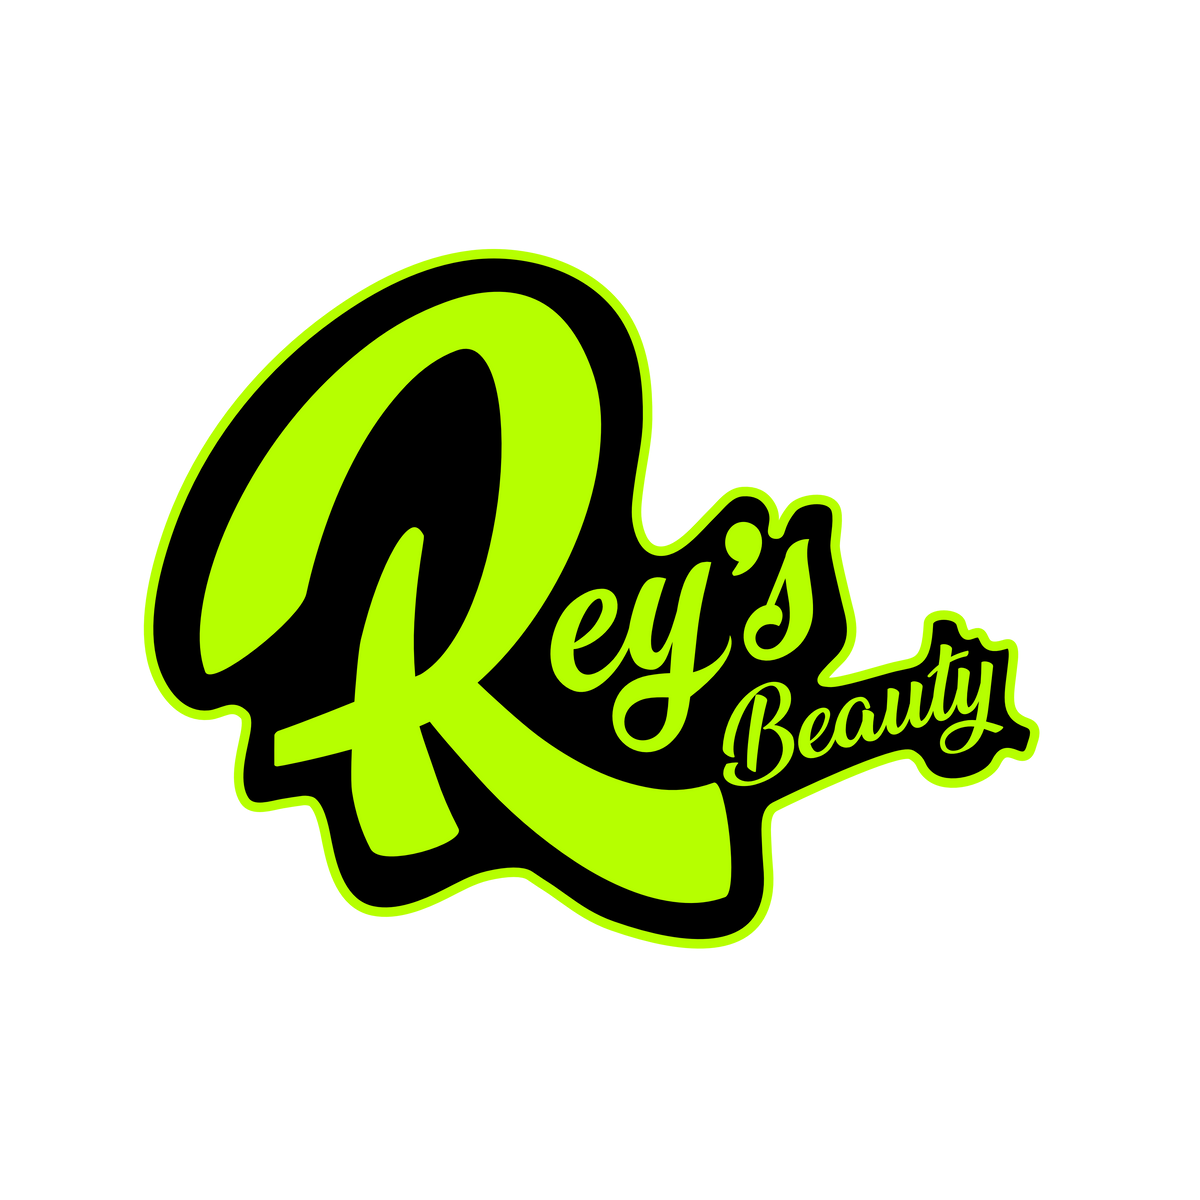 Rey’s Store